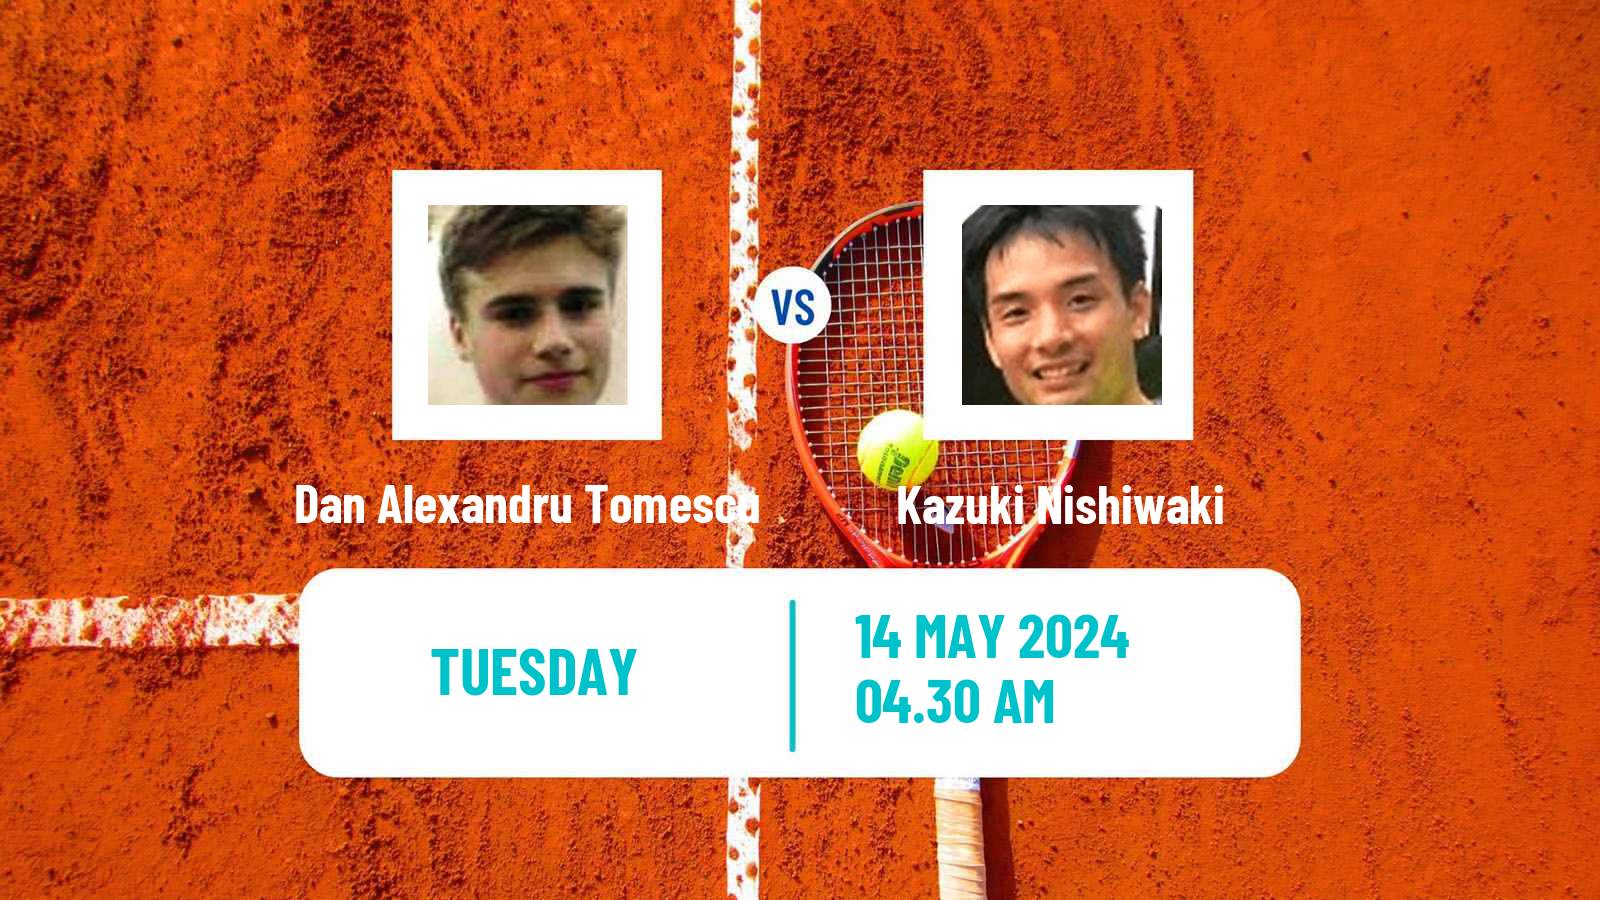 Tennis ITF M15 Bucharest 2 Men Dan Alexandru Tomescu - Kazuki Nishiwaki